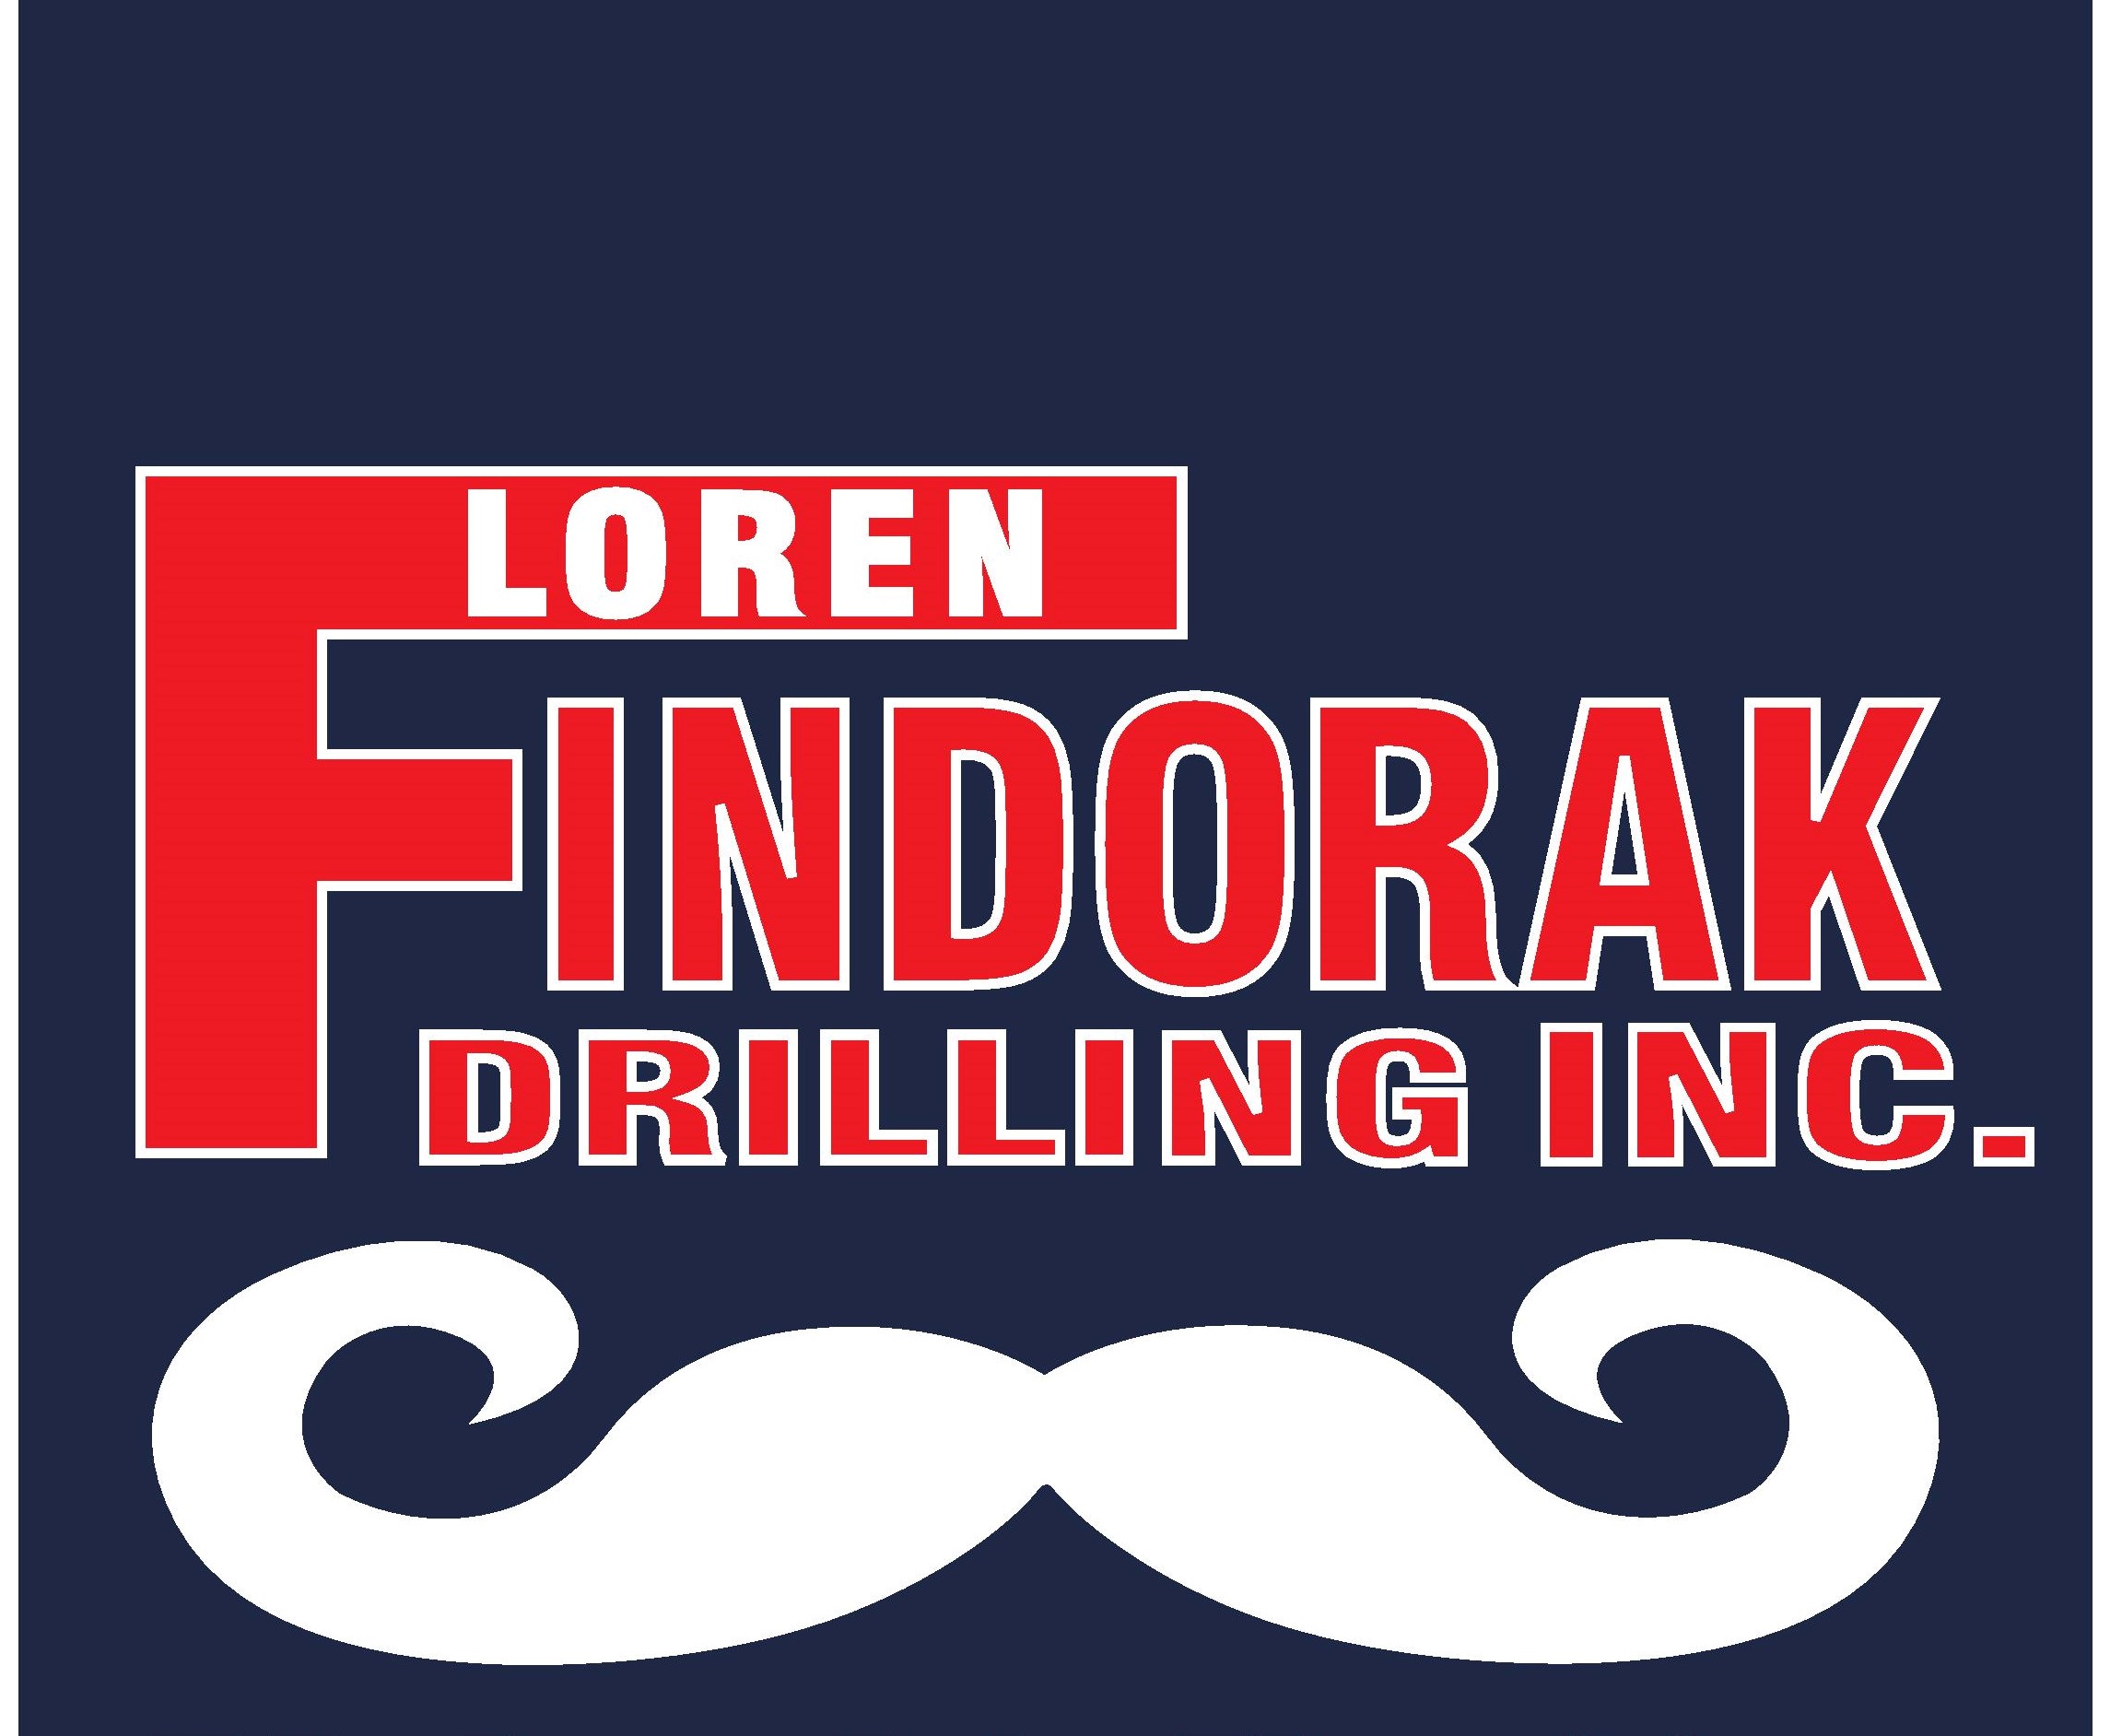 Loren Findorak Drilling, Inc. Logo